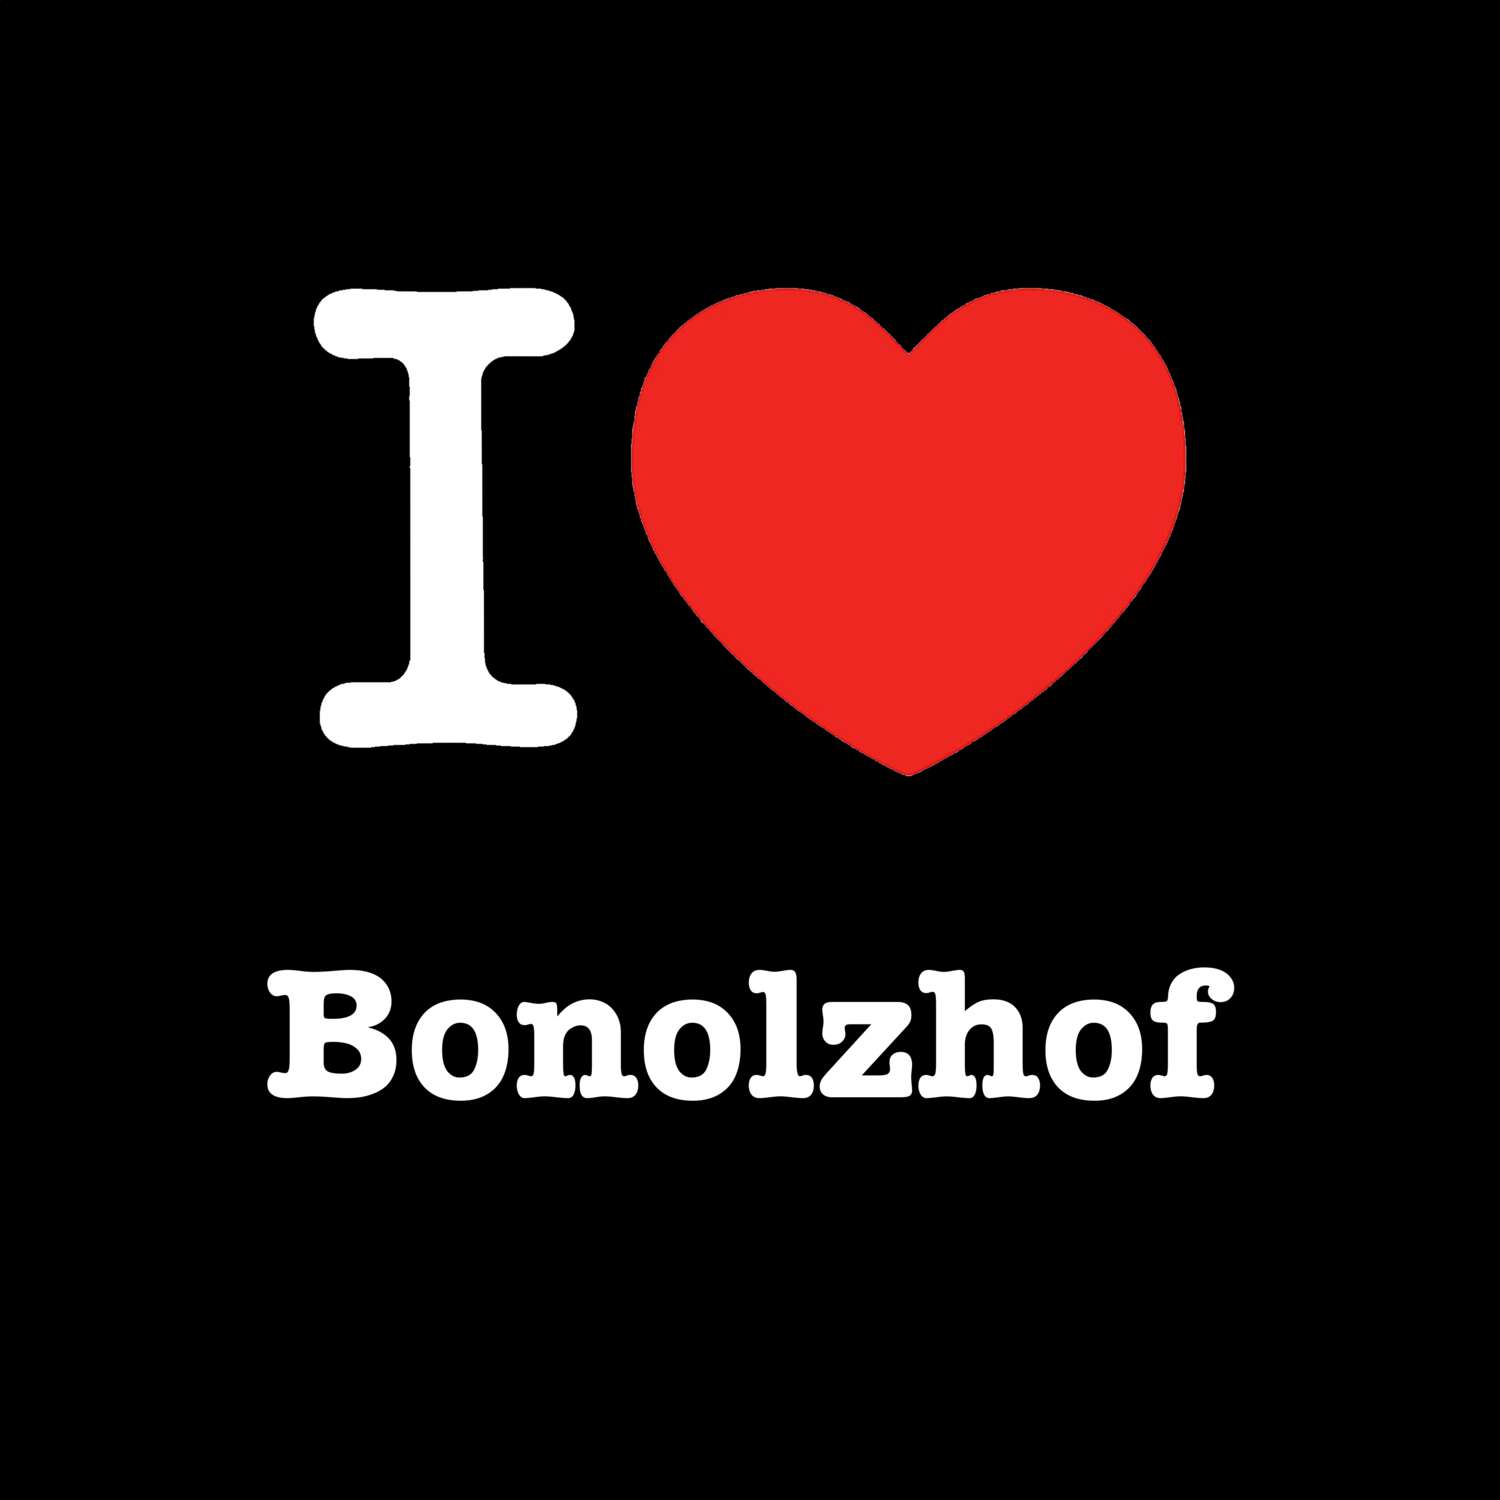 Bonolzhof T-Shirt »I love«